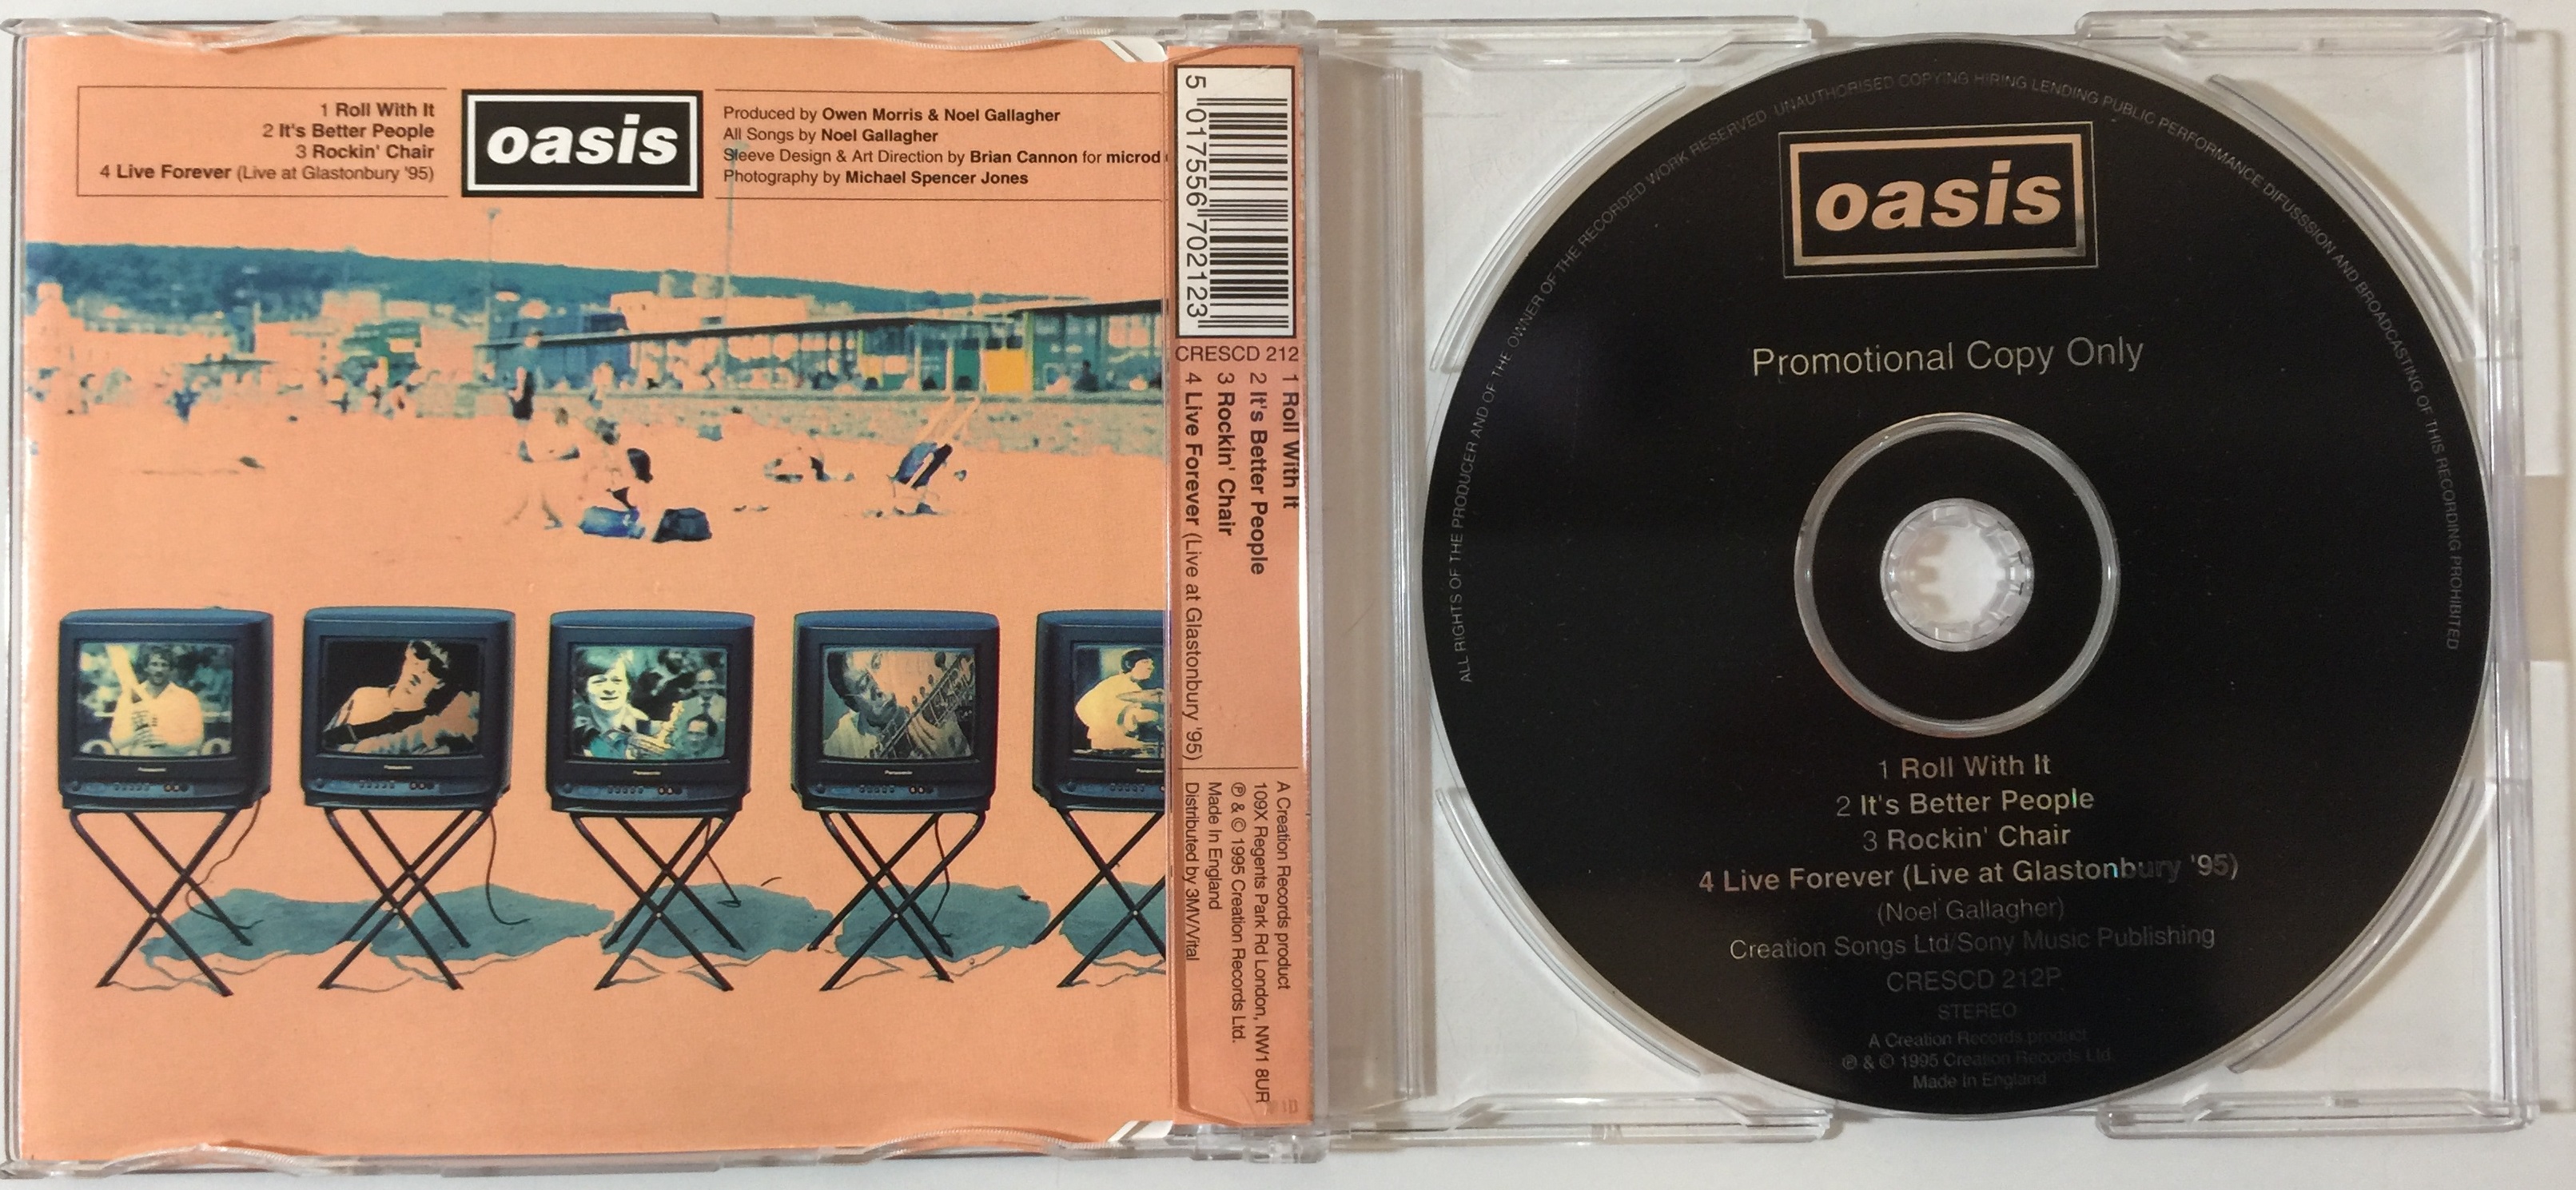 OASIS - PROMO CDs & CASSETTE. - Image 4 of 5